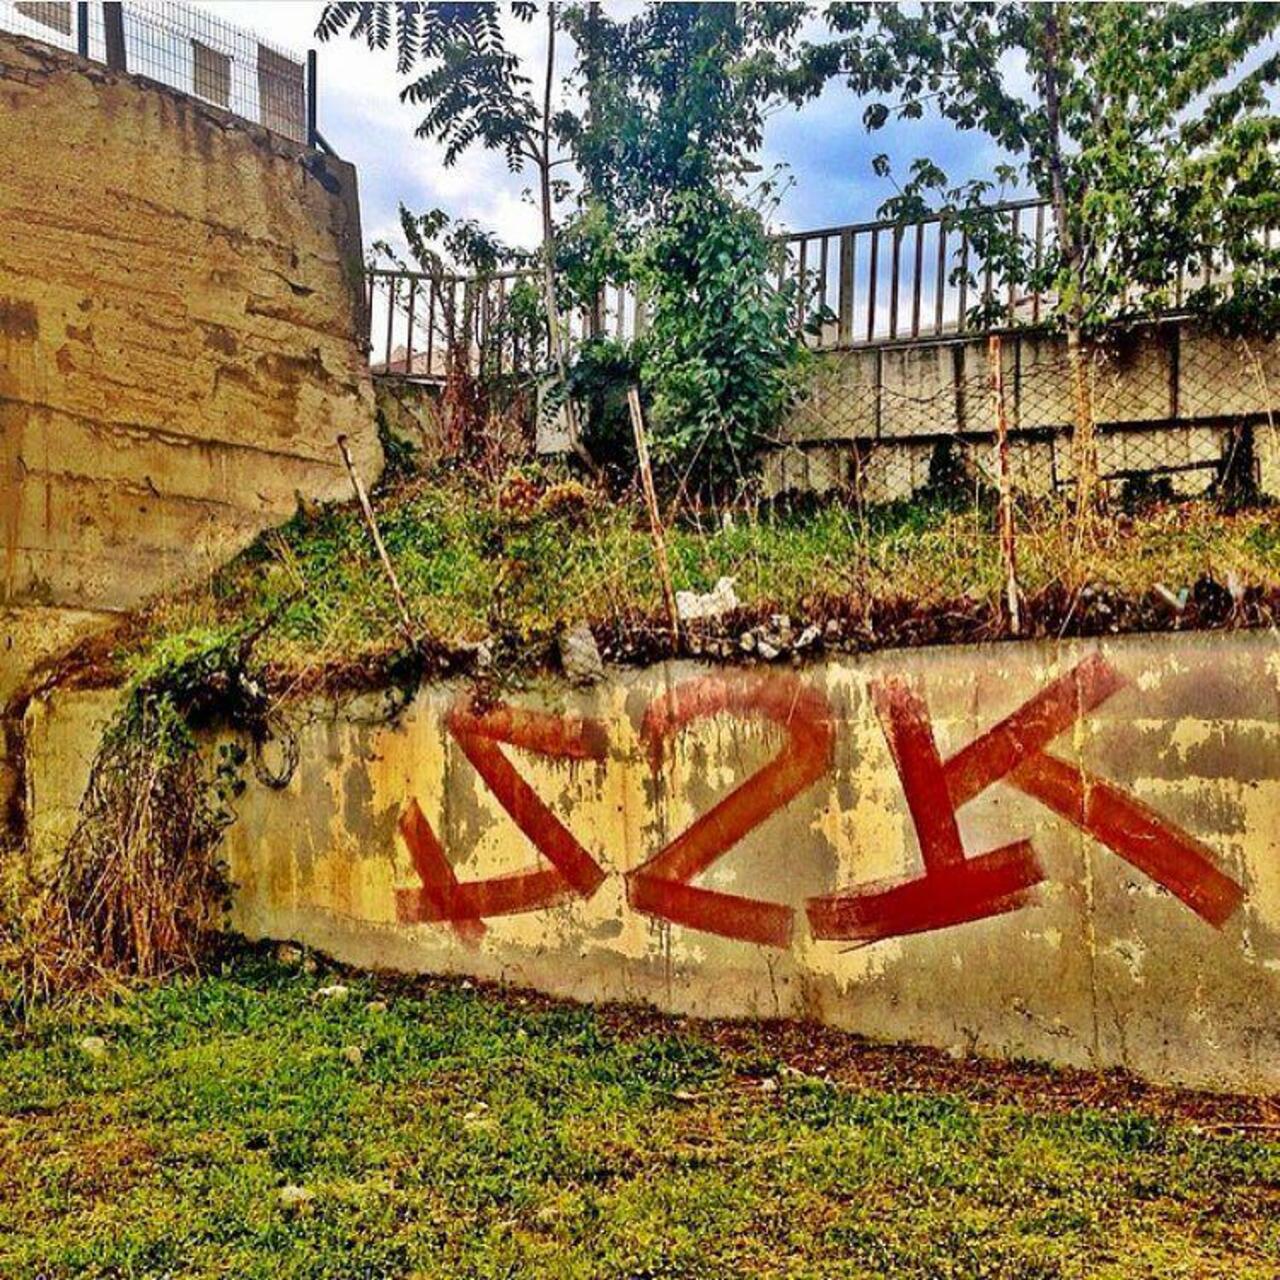 Turbo @tuncdindas #graffiti #graff #graffitiart #turkeygraffiti #graffititurkey #turkishgraffiti #streetart #street… http://t.co/Xl7wmvbbha